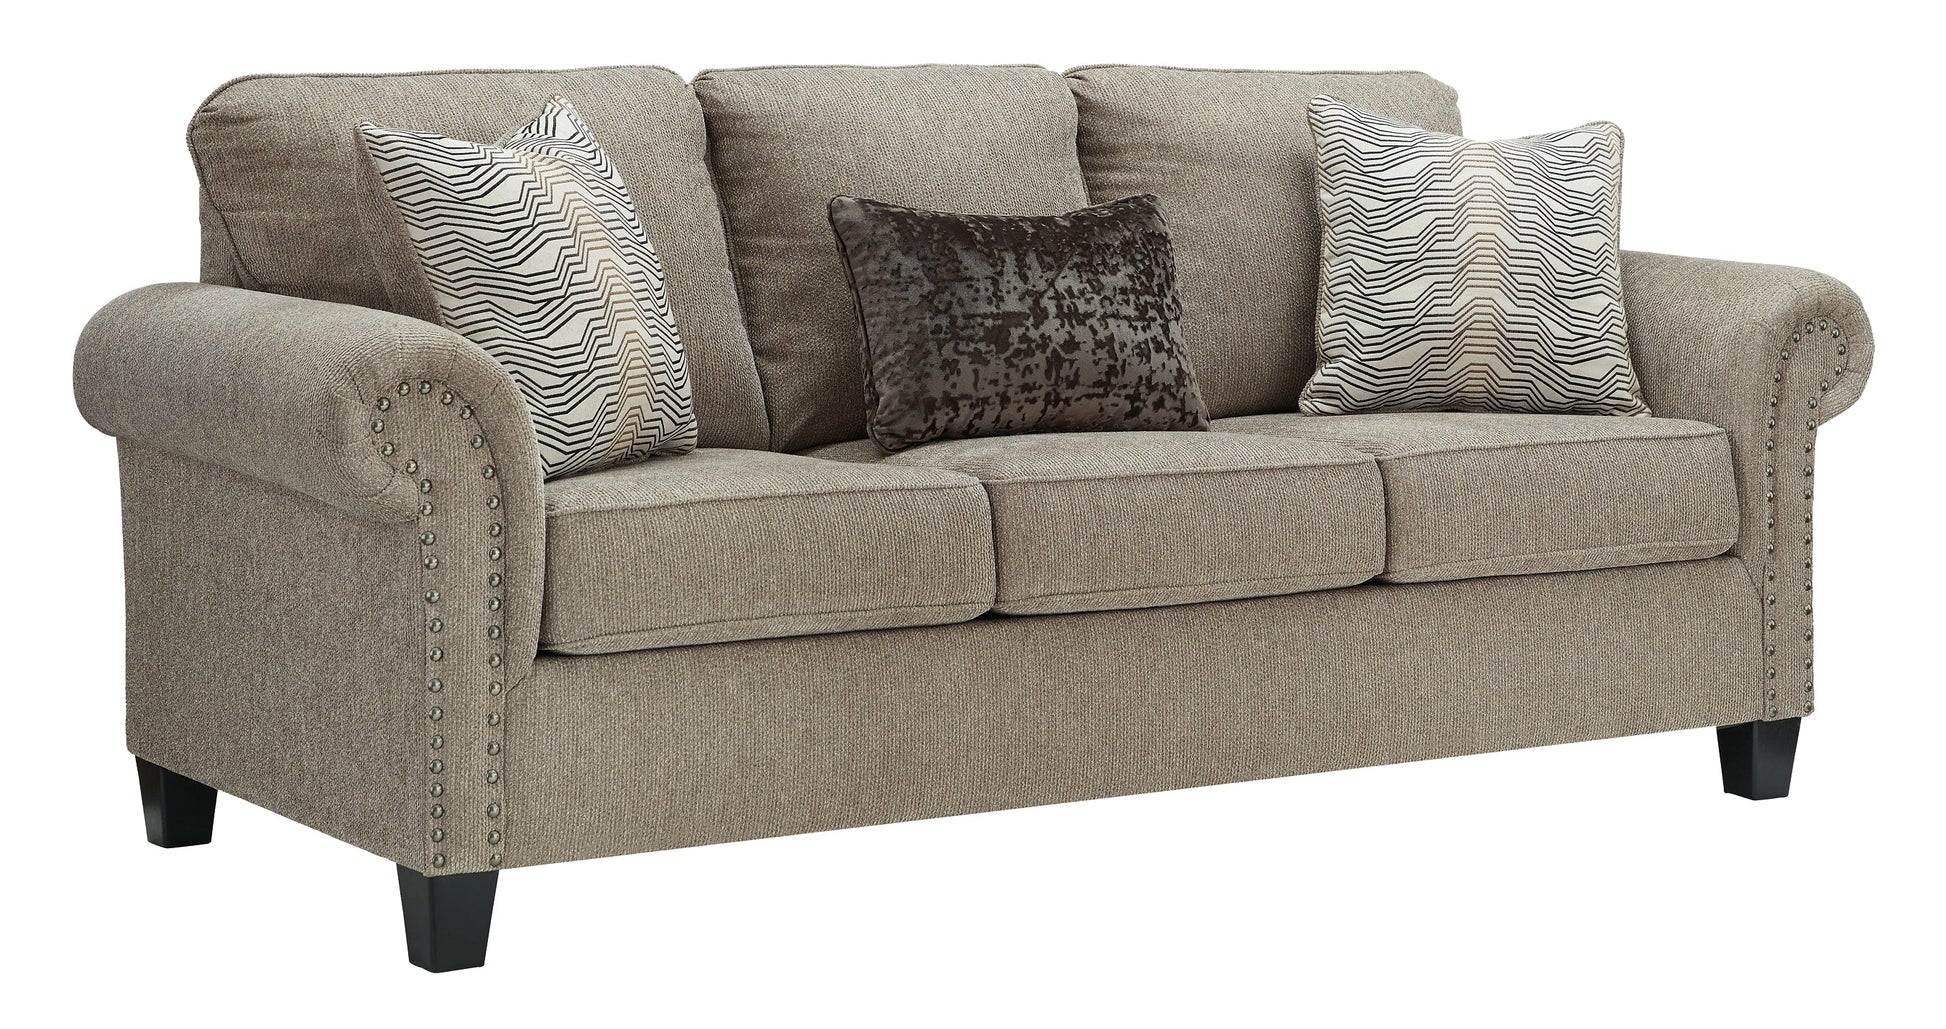 Shewsbury Sofa and Loveseat at Cloud 9 Mattress & Furniture furniture, home furnishing, home decor